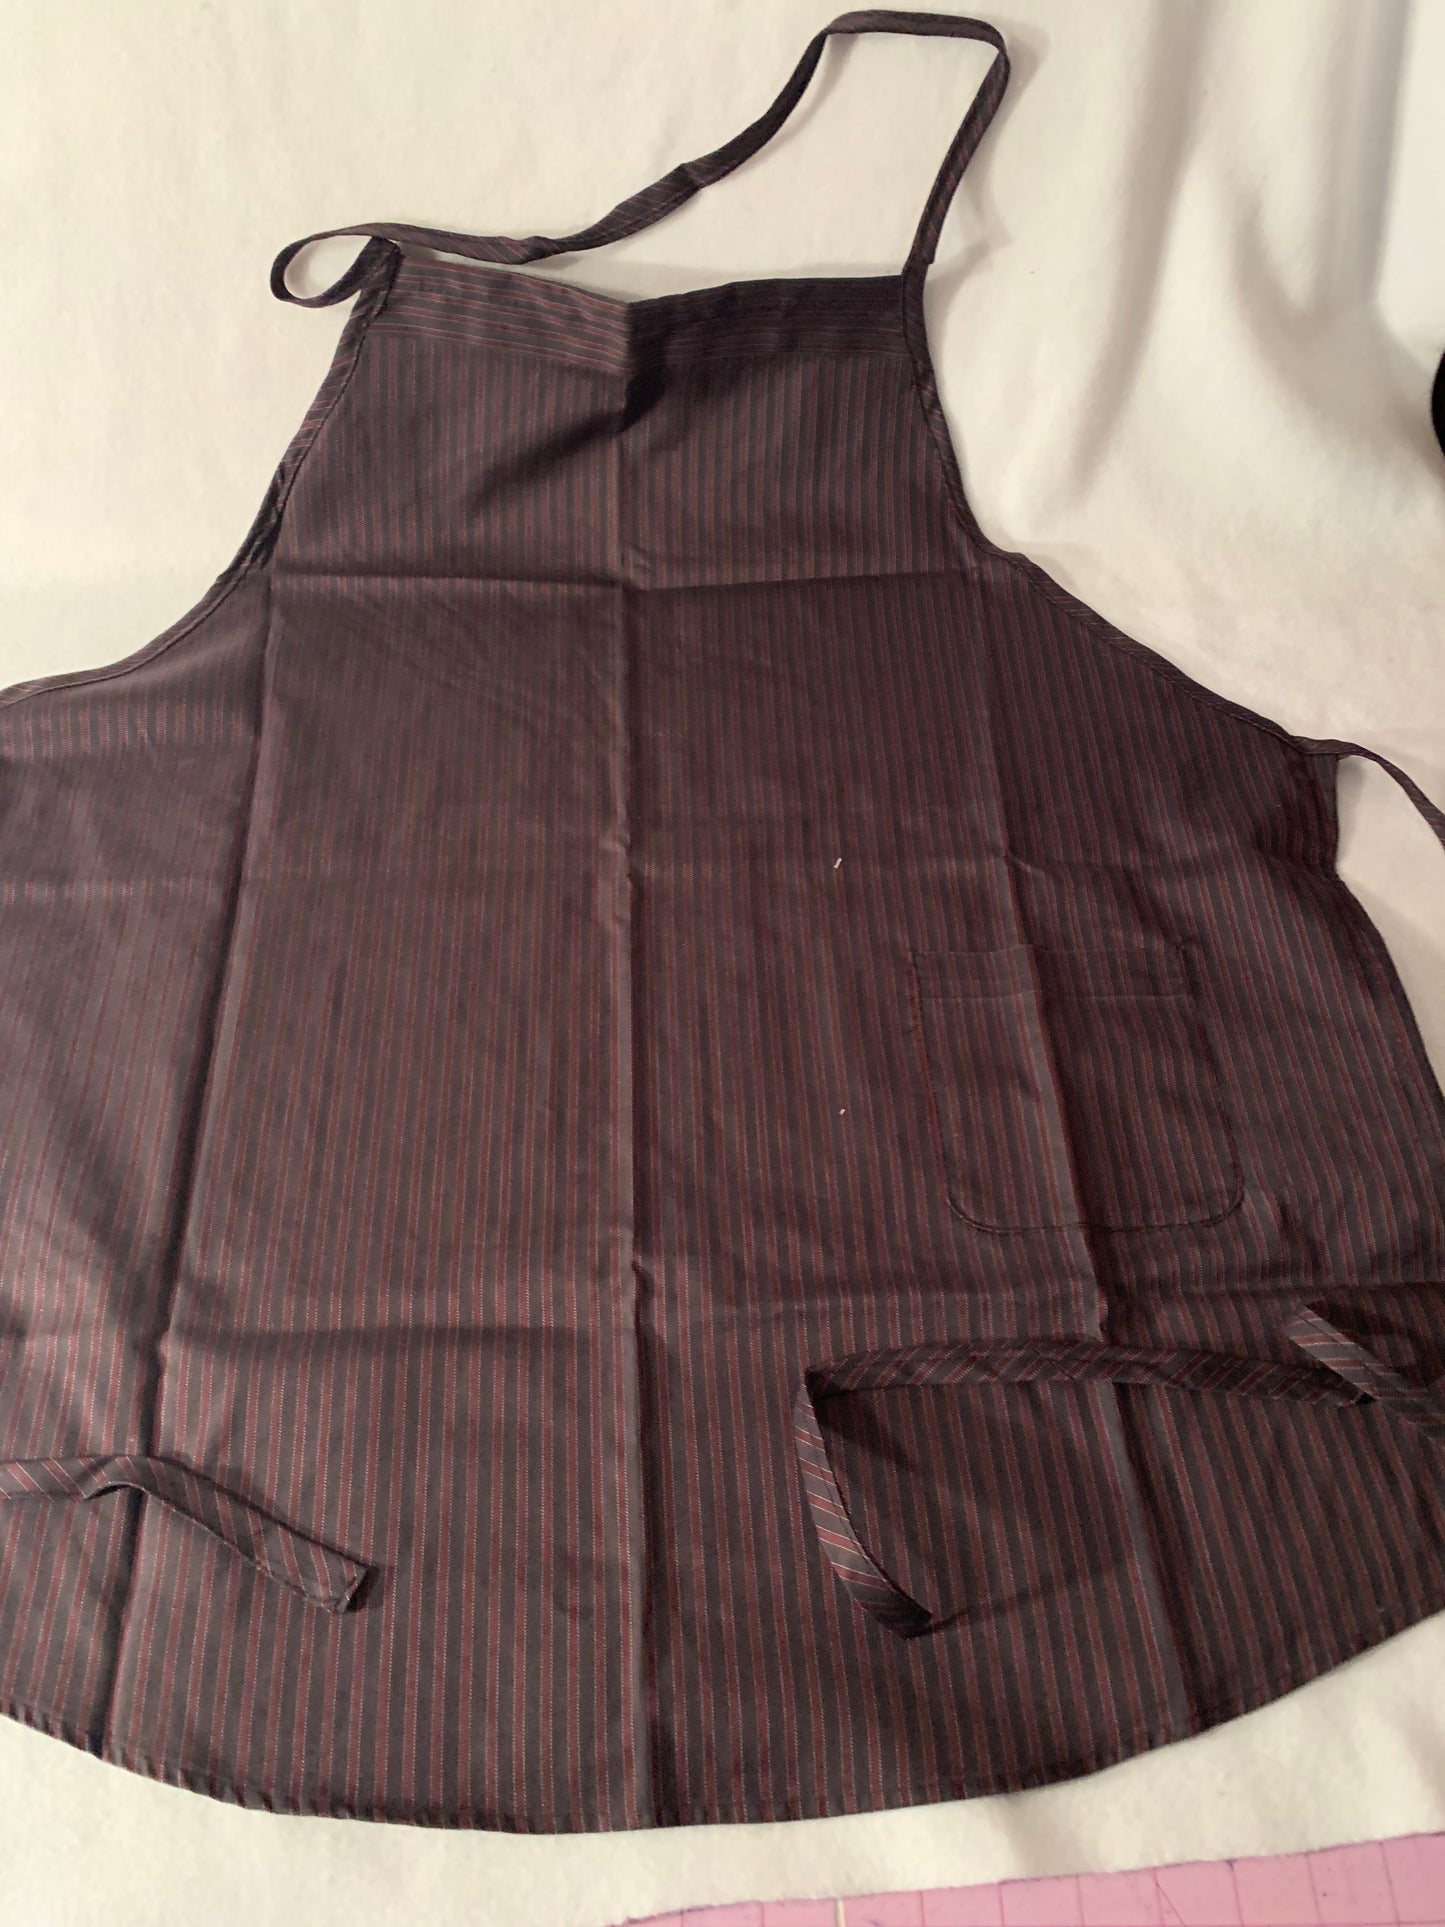 Adult Apron with pockets, kitchen apron, adult or large child, washable, craft apron, male shirt apron